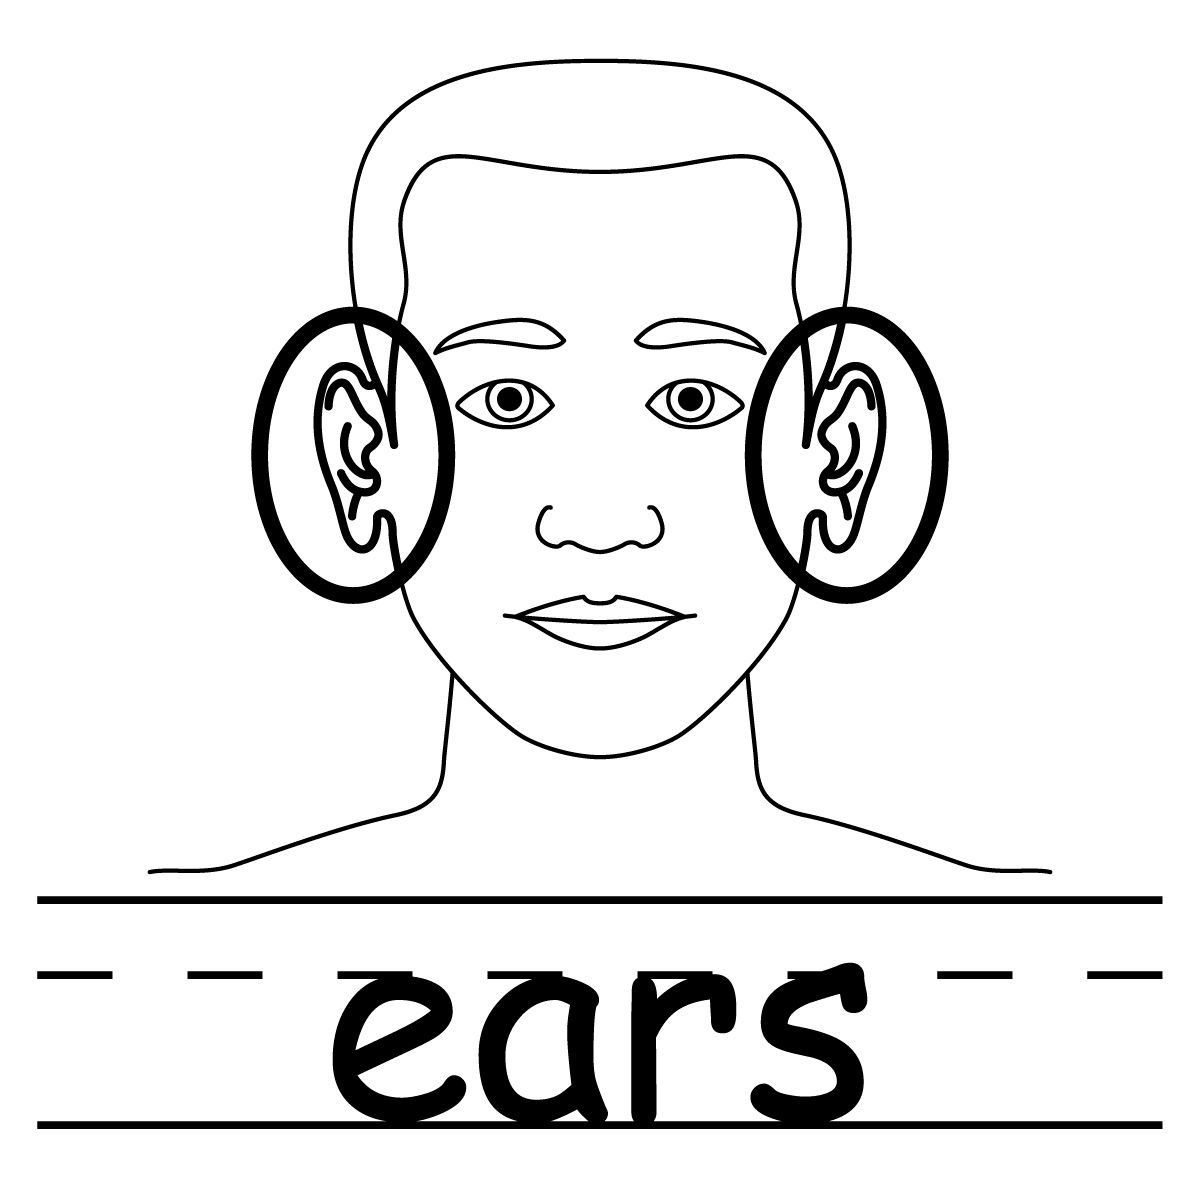 Elf Ears Coloring Page at GetColorings.com | Free printable colorings